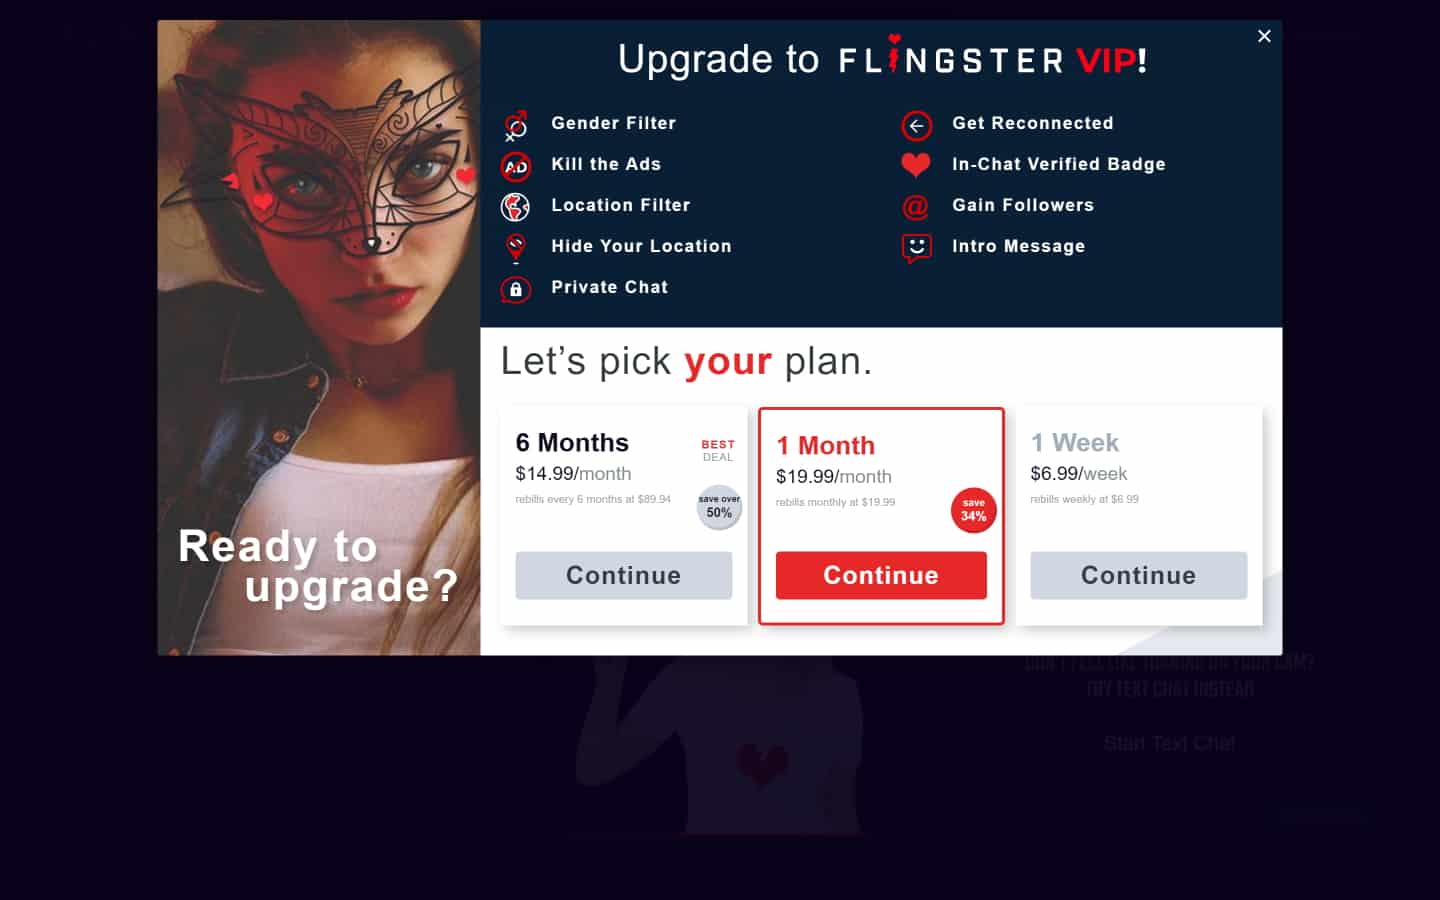 Review Flingster.com payment